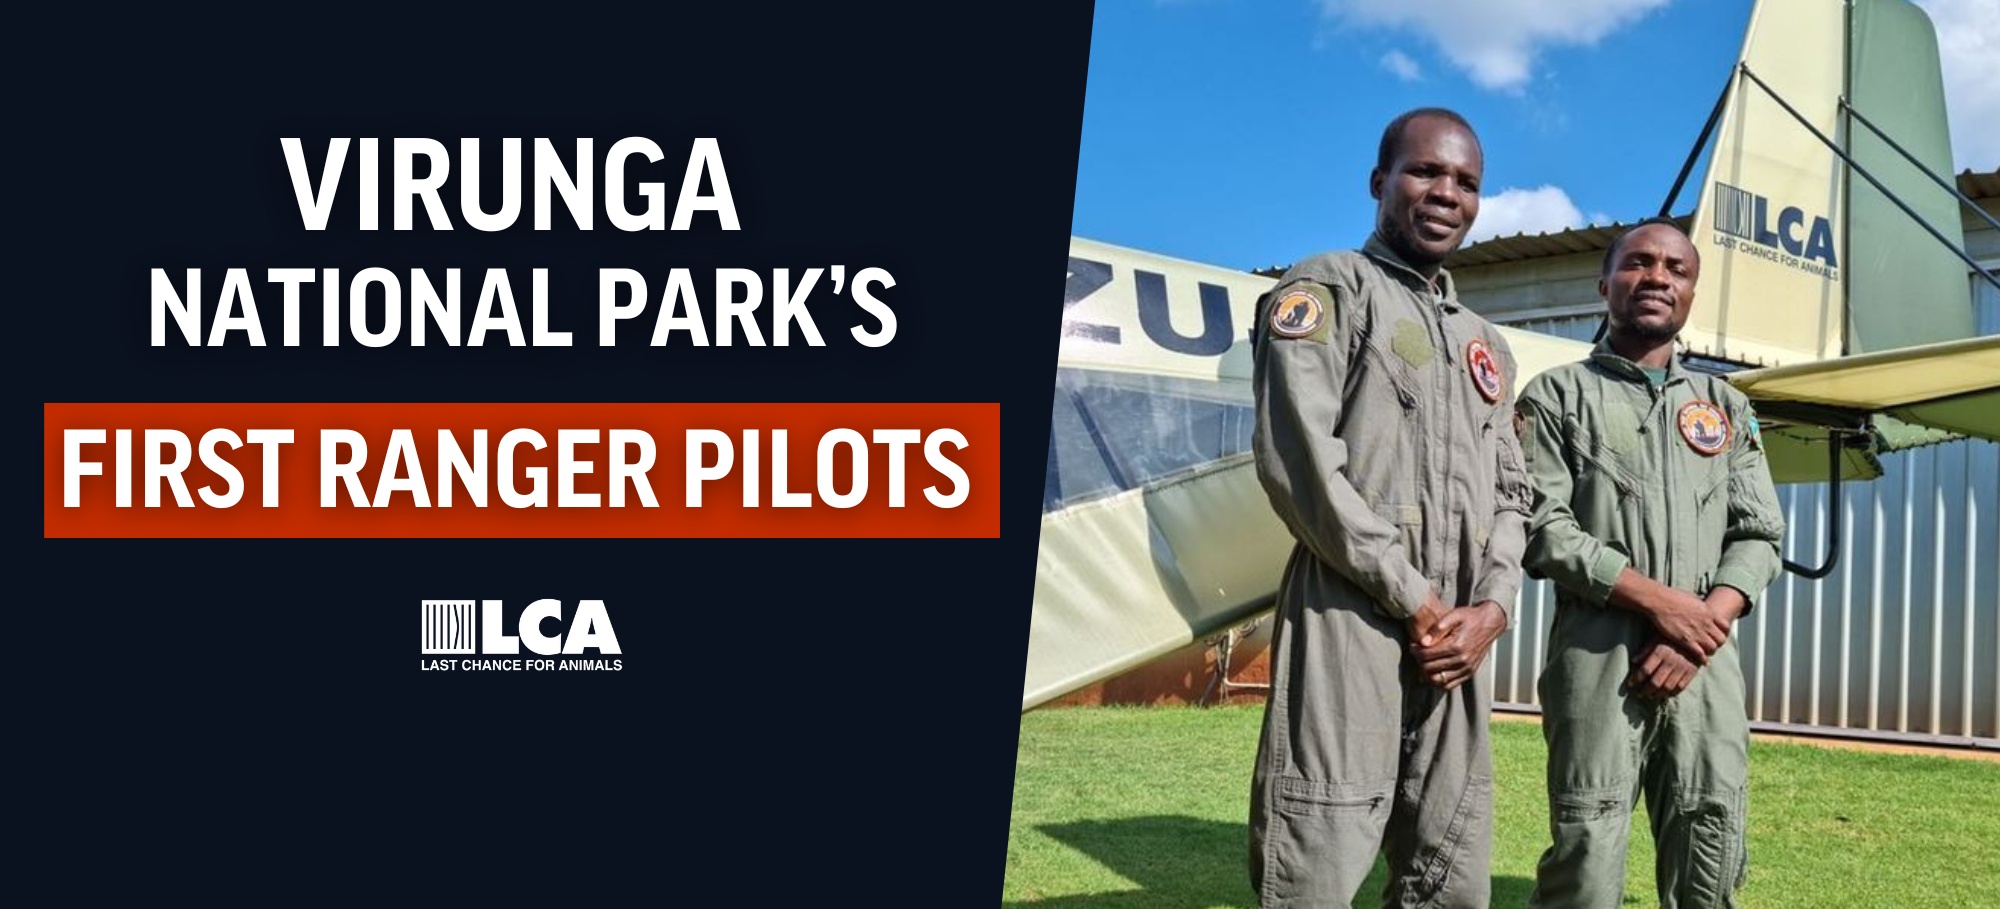 Virunga National Parks First Ranger Pilots